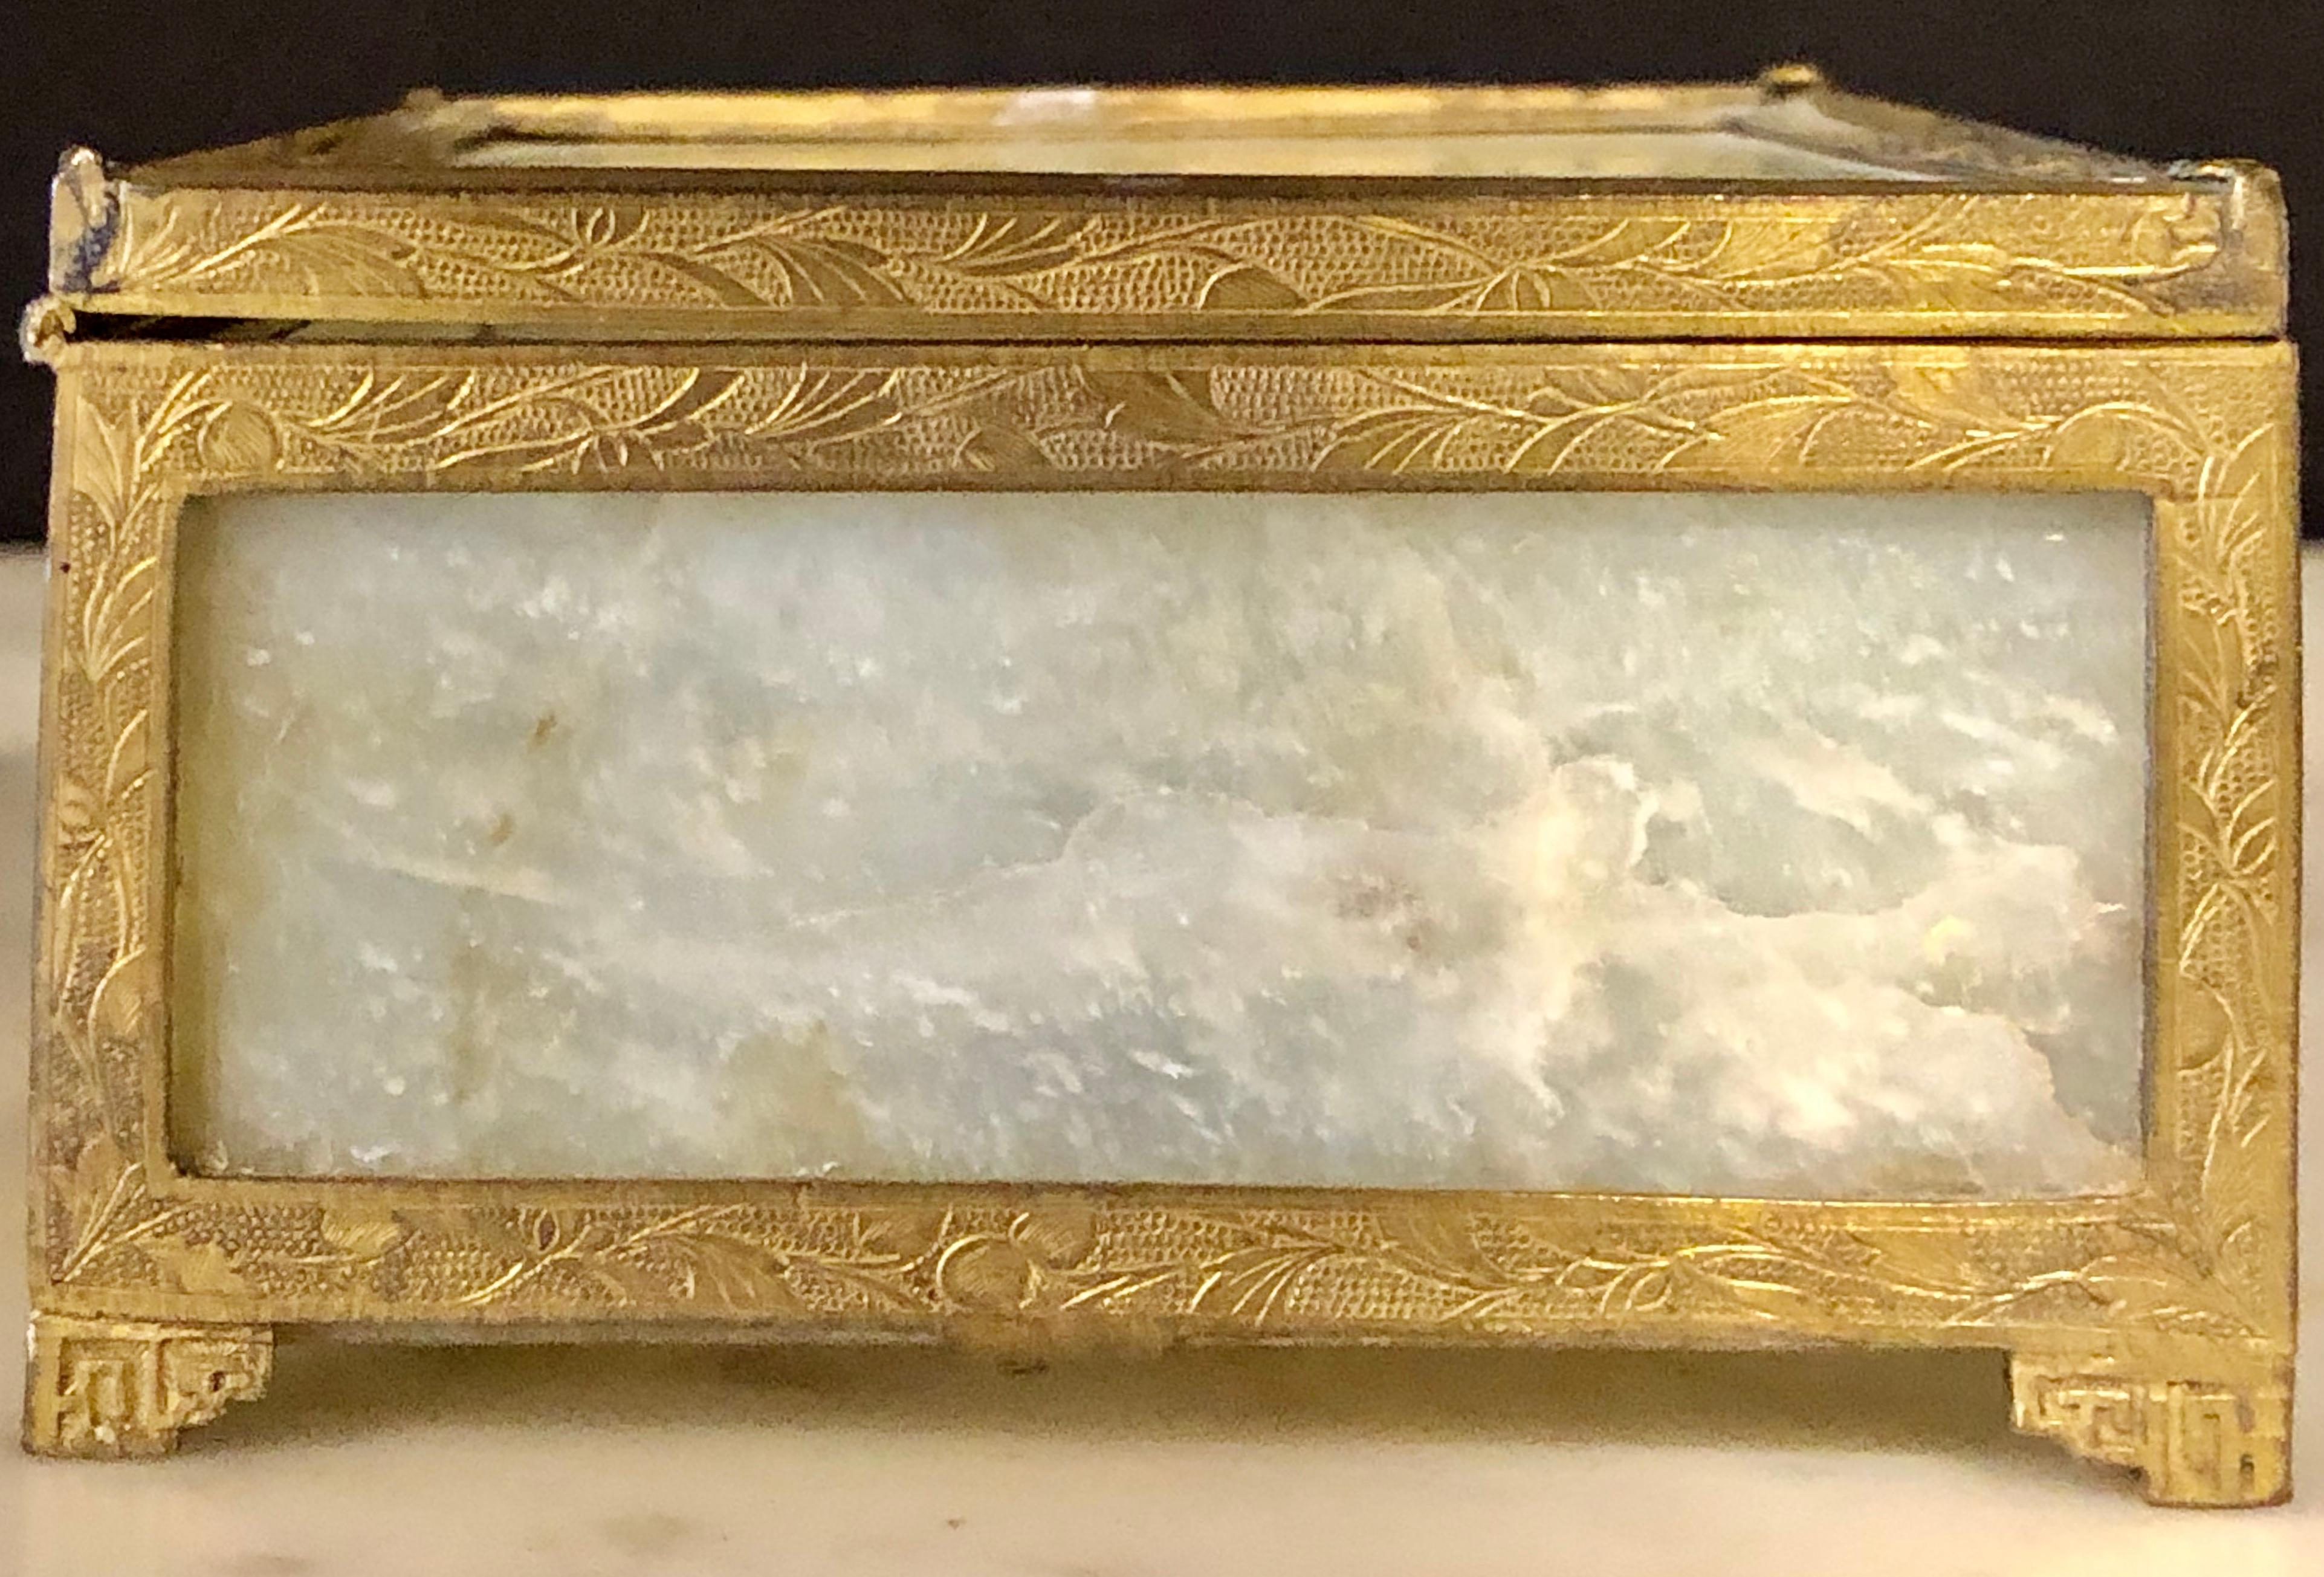 20th Century Chinese Jade and Gilt Metal Vanity Box, Casket Box